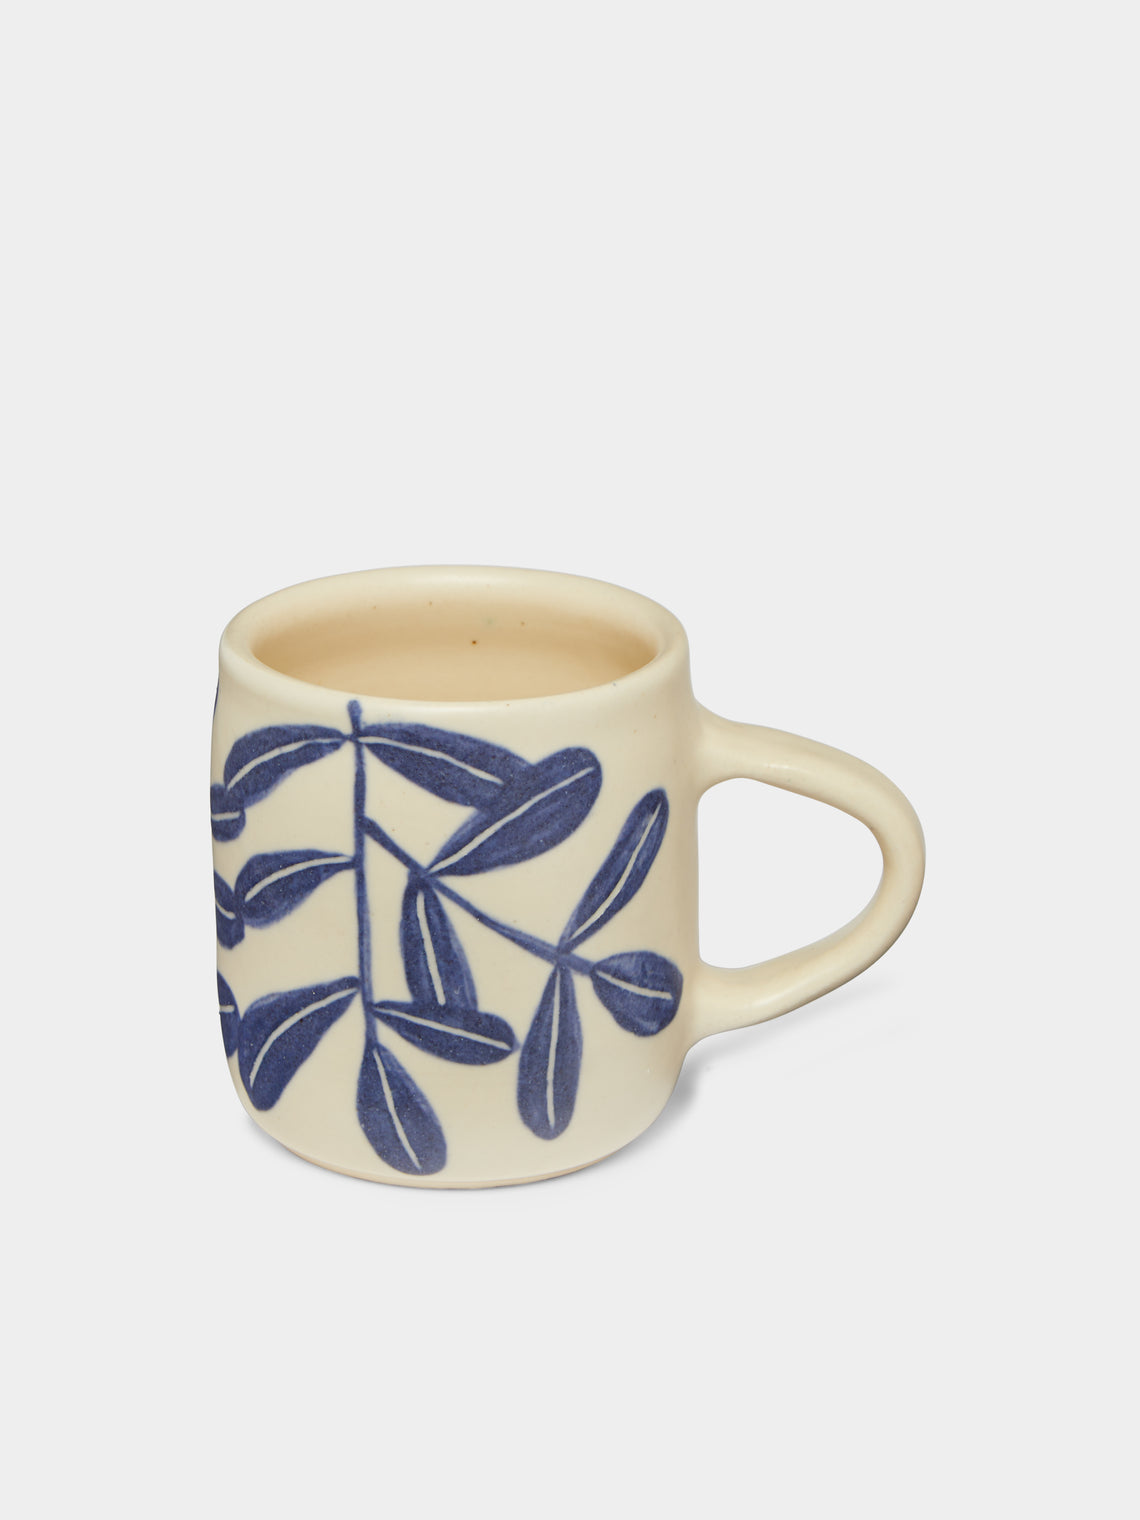 Azul Patagonia - Flying Bird Hand-Painted Ceramic Mug -  - ABASK - 